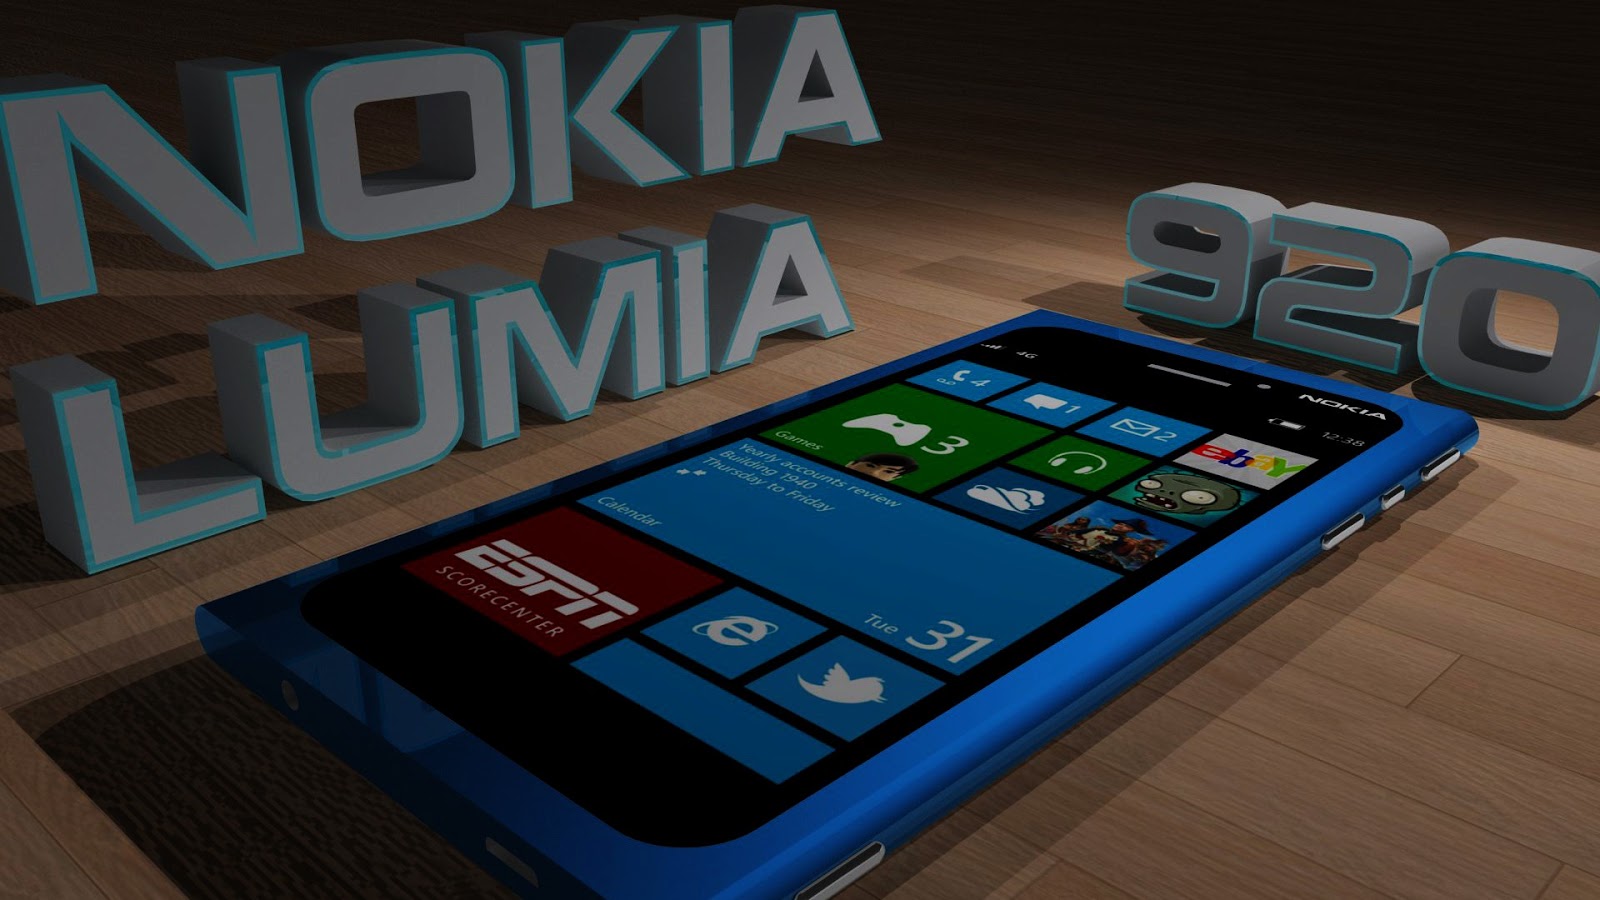 Nokia Lumia Wallpaper HD